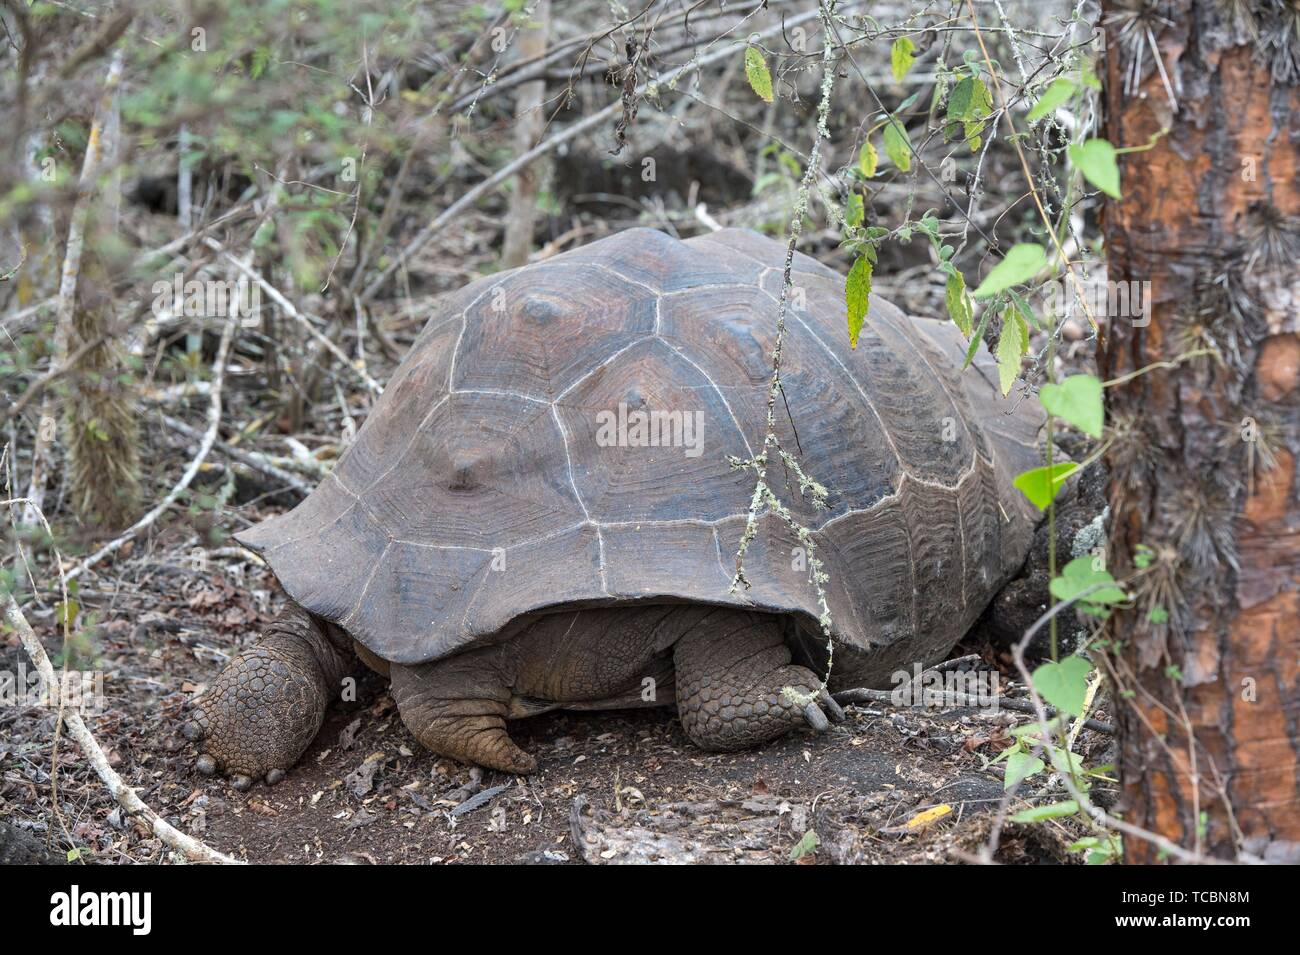 Galápagos giant tortoise (Chelonoidis nigra ssp), resting after having eaten, in situ, Isabela Island, Galapagos Islands, Ecuador. Stock Photo